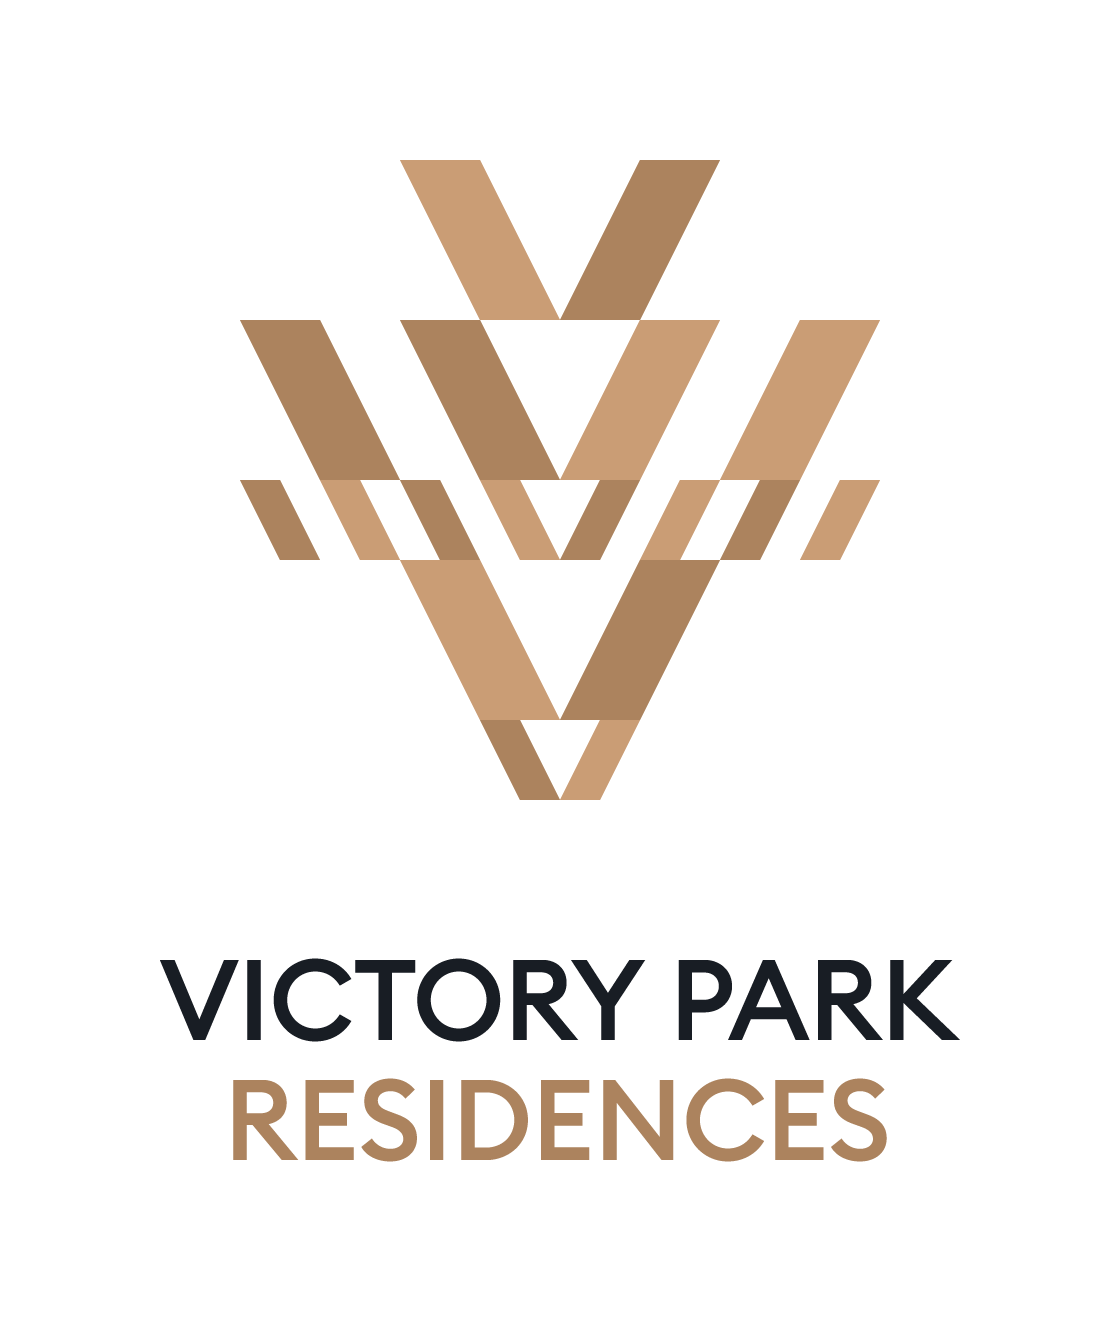 Victory park residences жк. Victory Park Residences логотип. ЖК Виктори парк Резиденсез. Ант Девелопмент Резиденс парк.